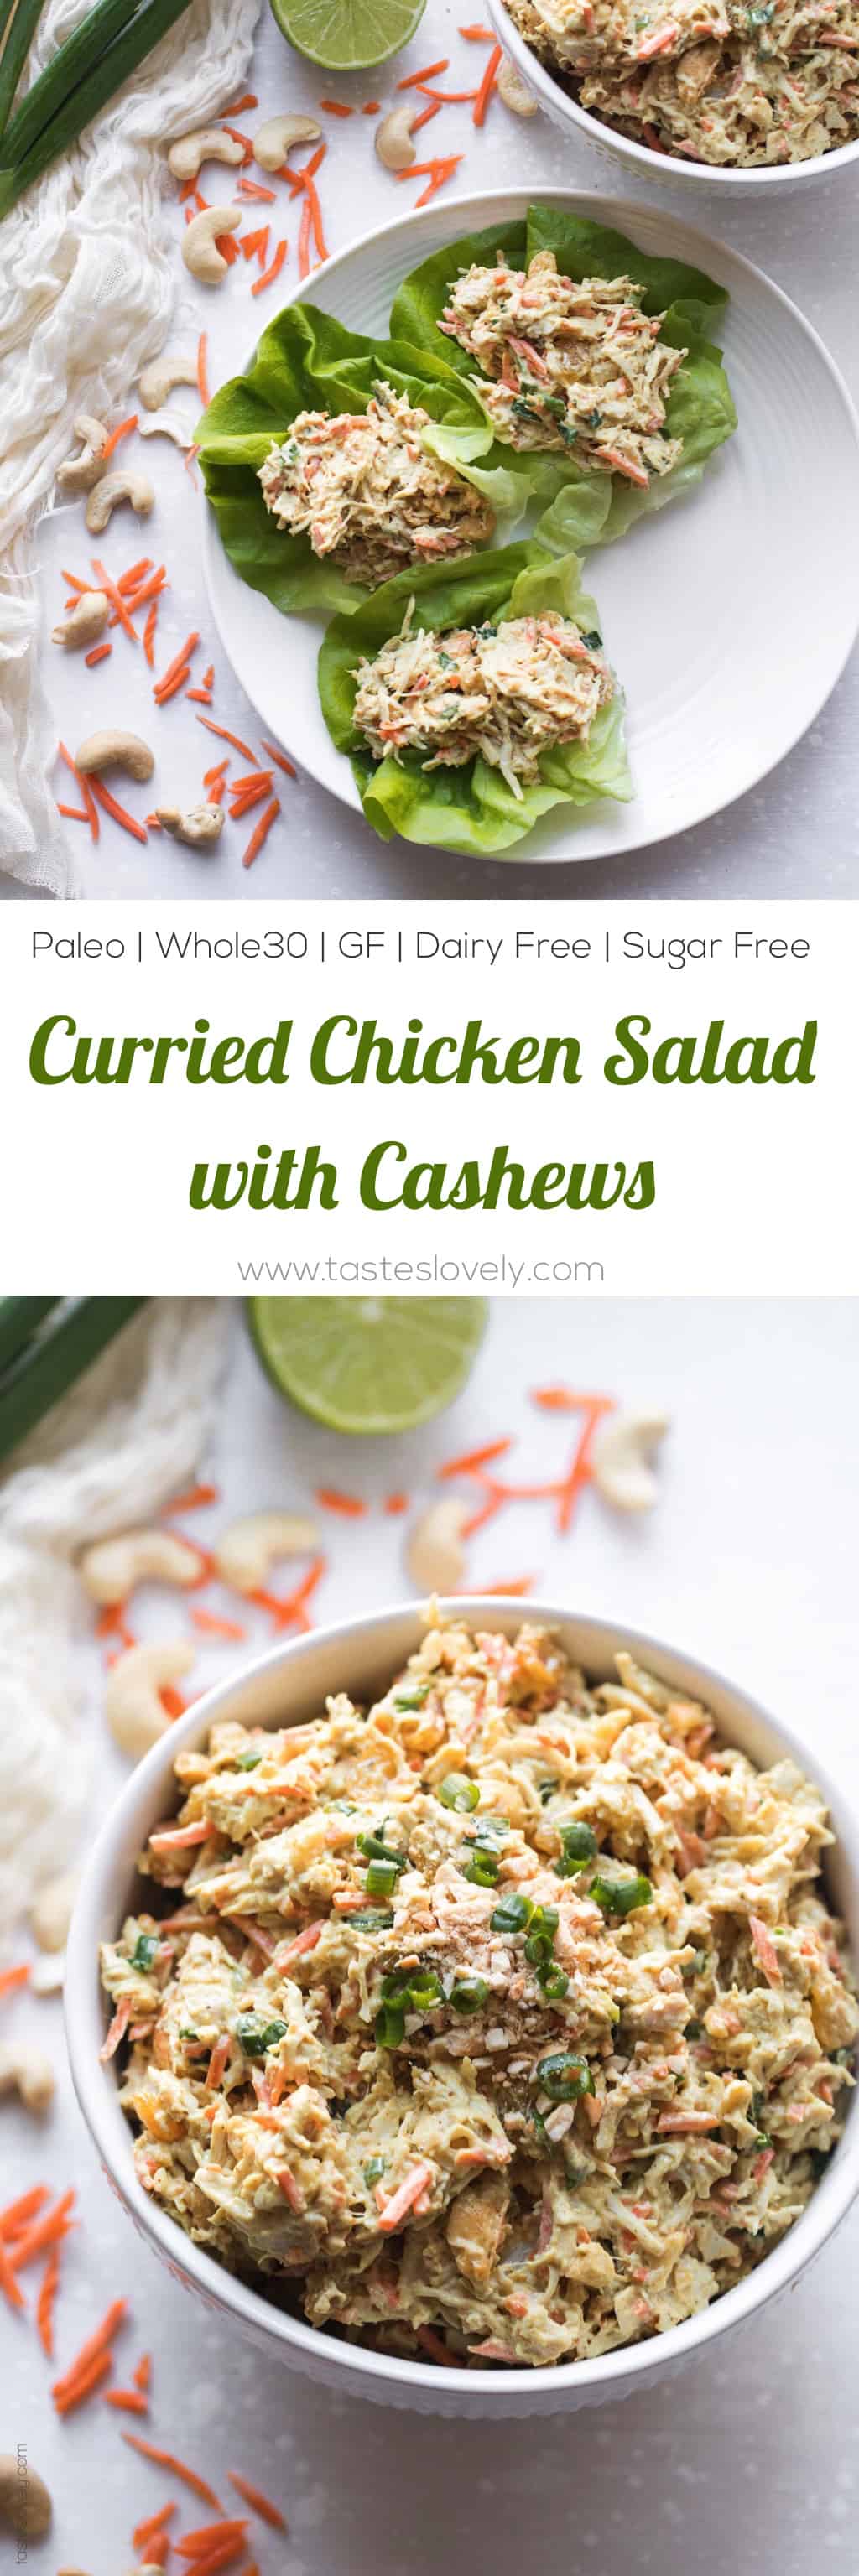 Curried Chicken Salad with Cashews (Paleo, Whole30, Gluten Free, Dairy Free, Refined Sugar Free)